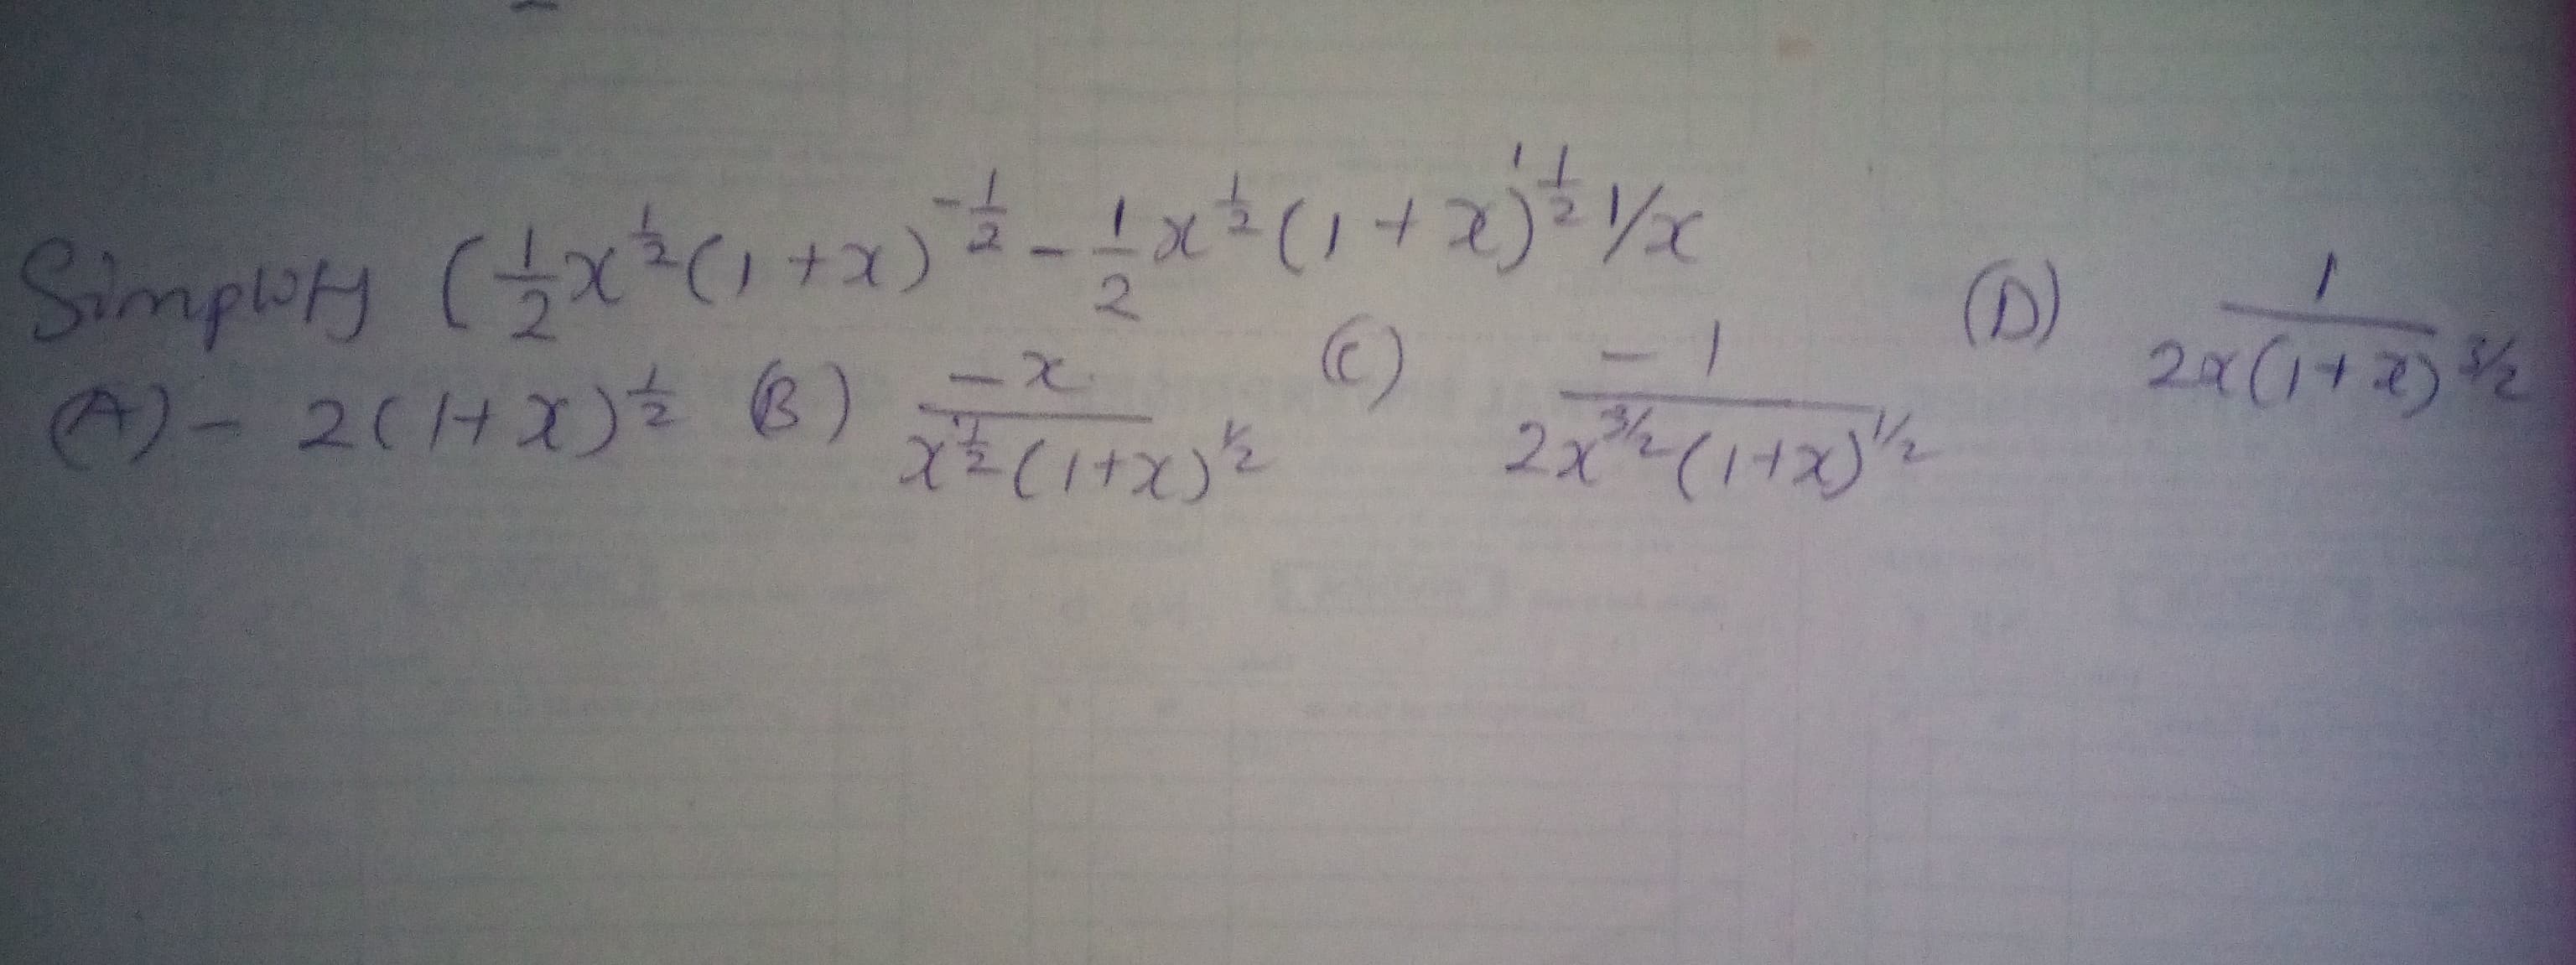 Simplety (xc+-x(+
-2(42)을 @)
2.
(D)
(@)
2x(112)2
-1
